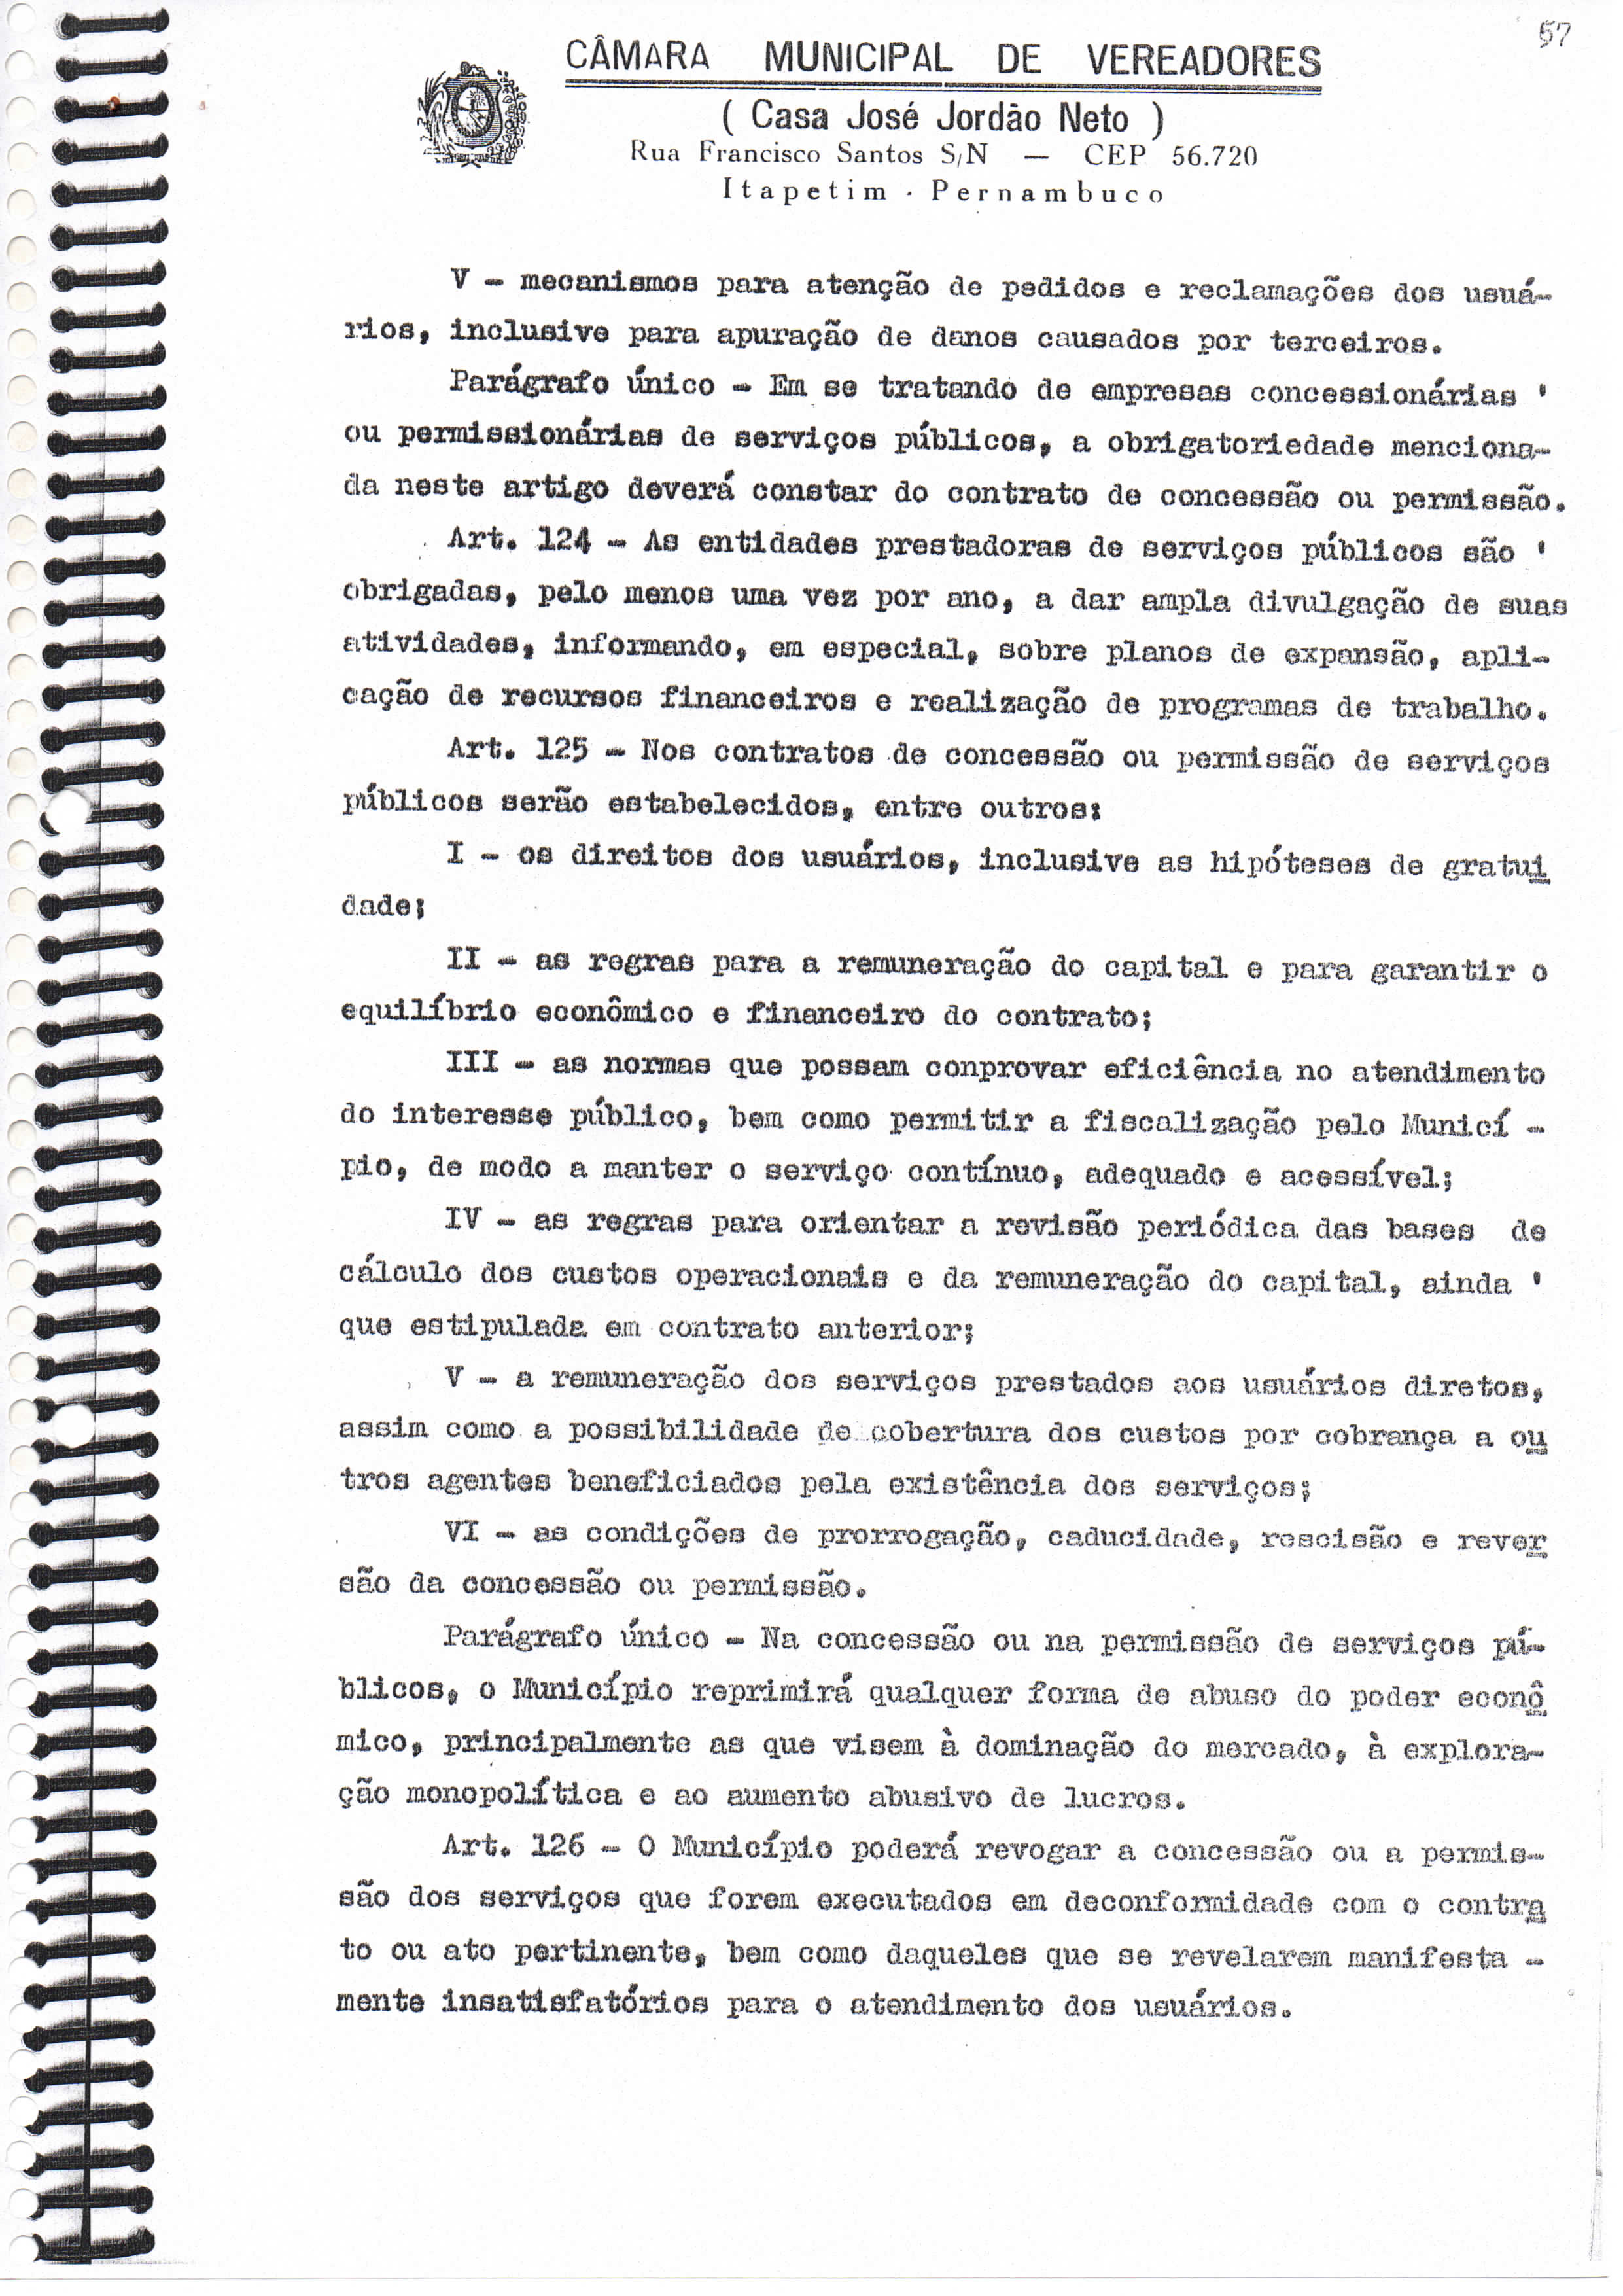 Lei Organica do Municipio_Página_65.jpg